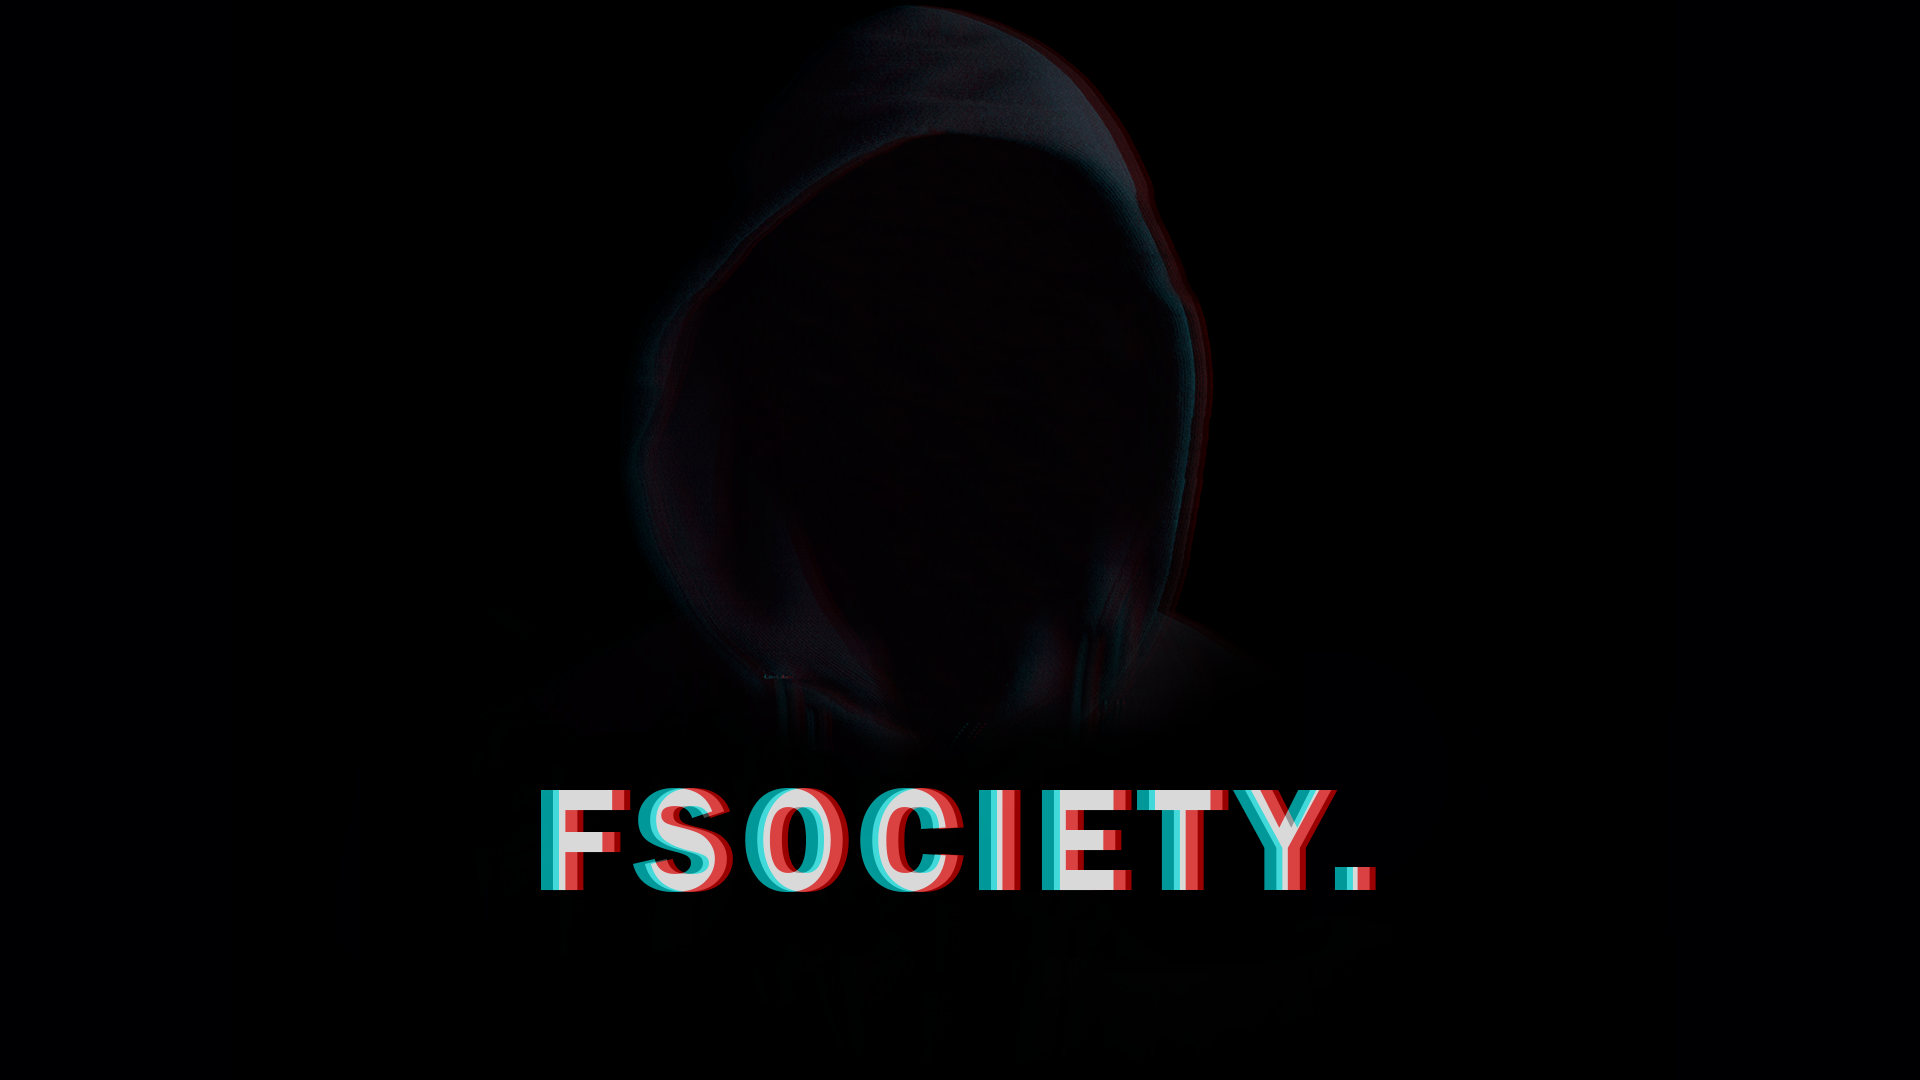 F Society Wallpaper | HD Wallpapers